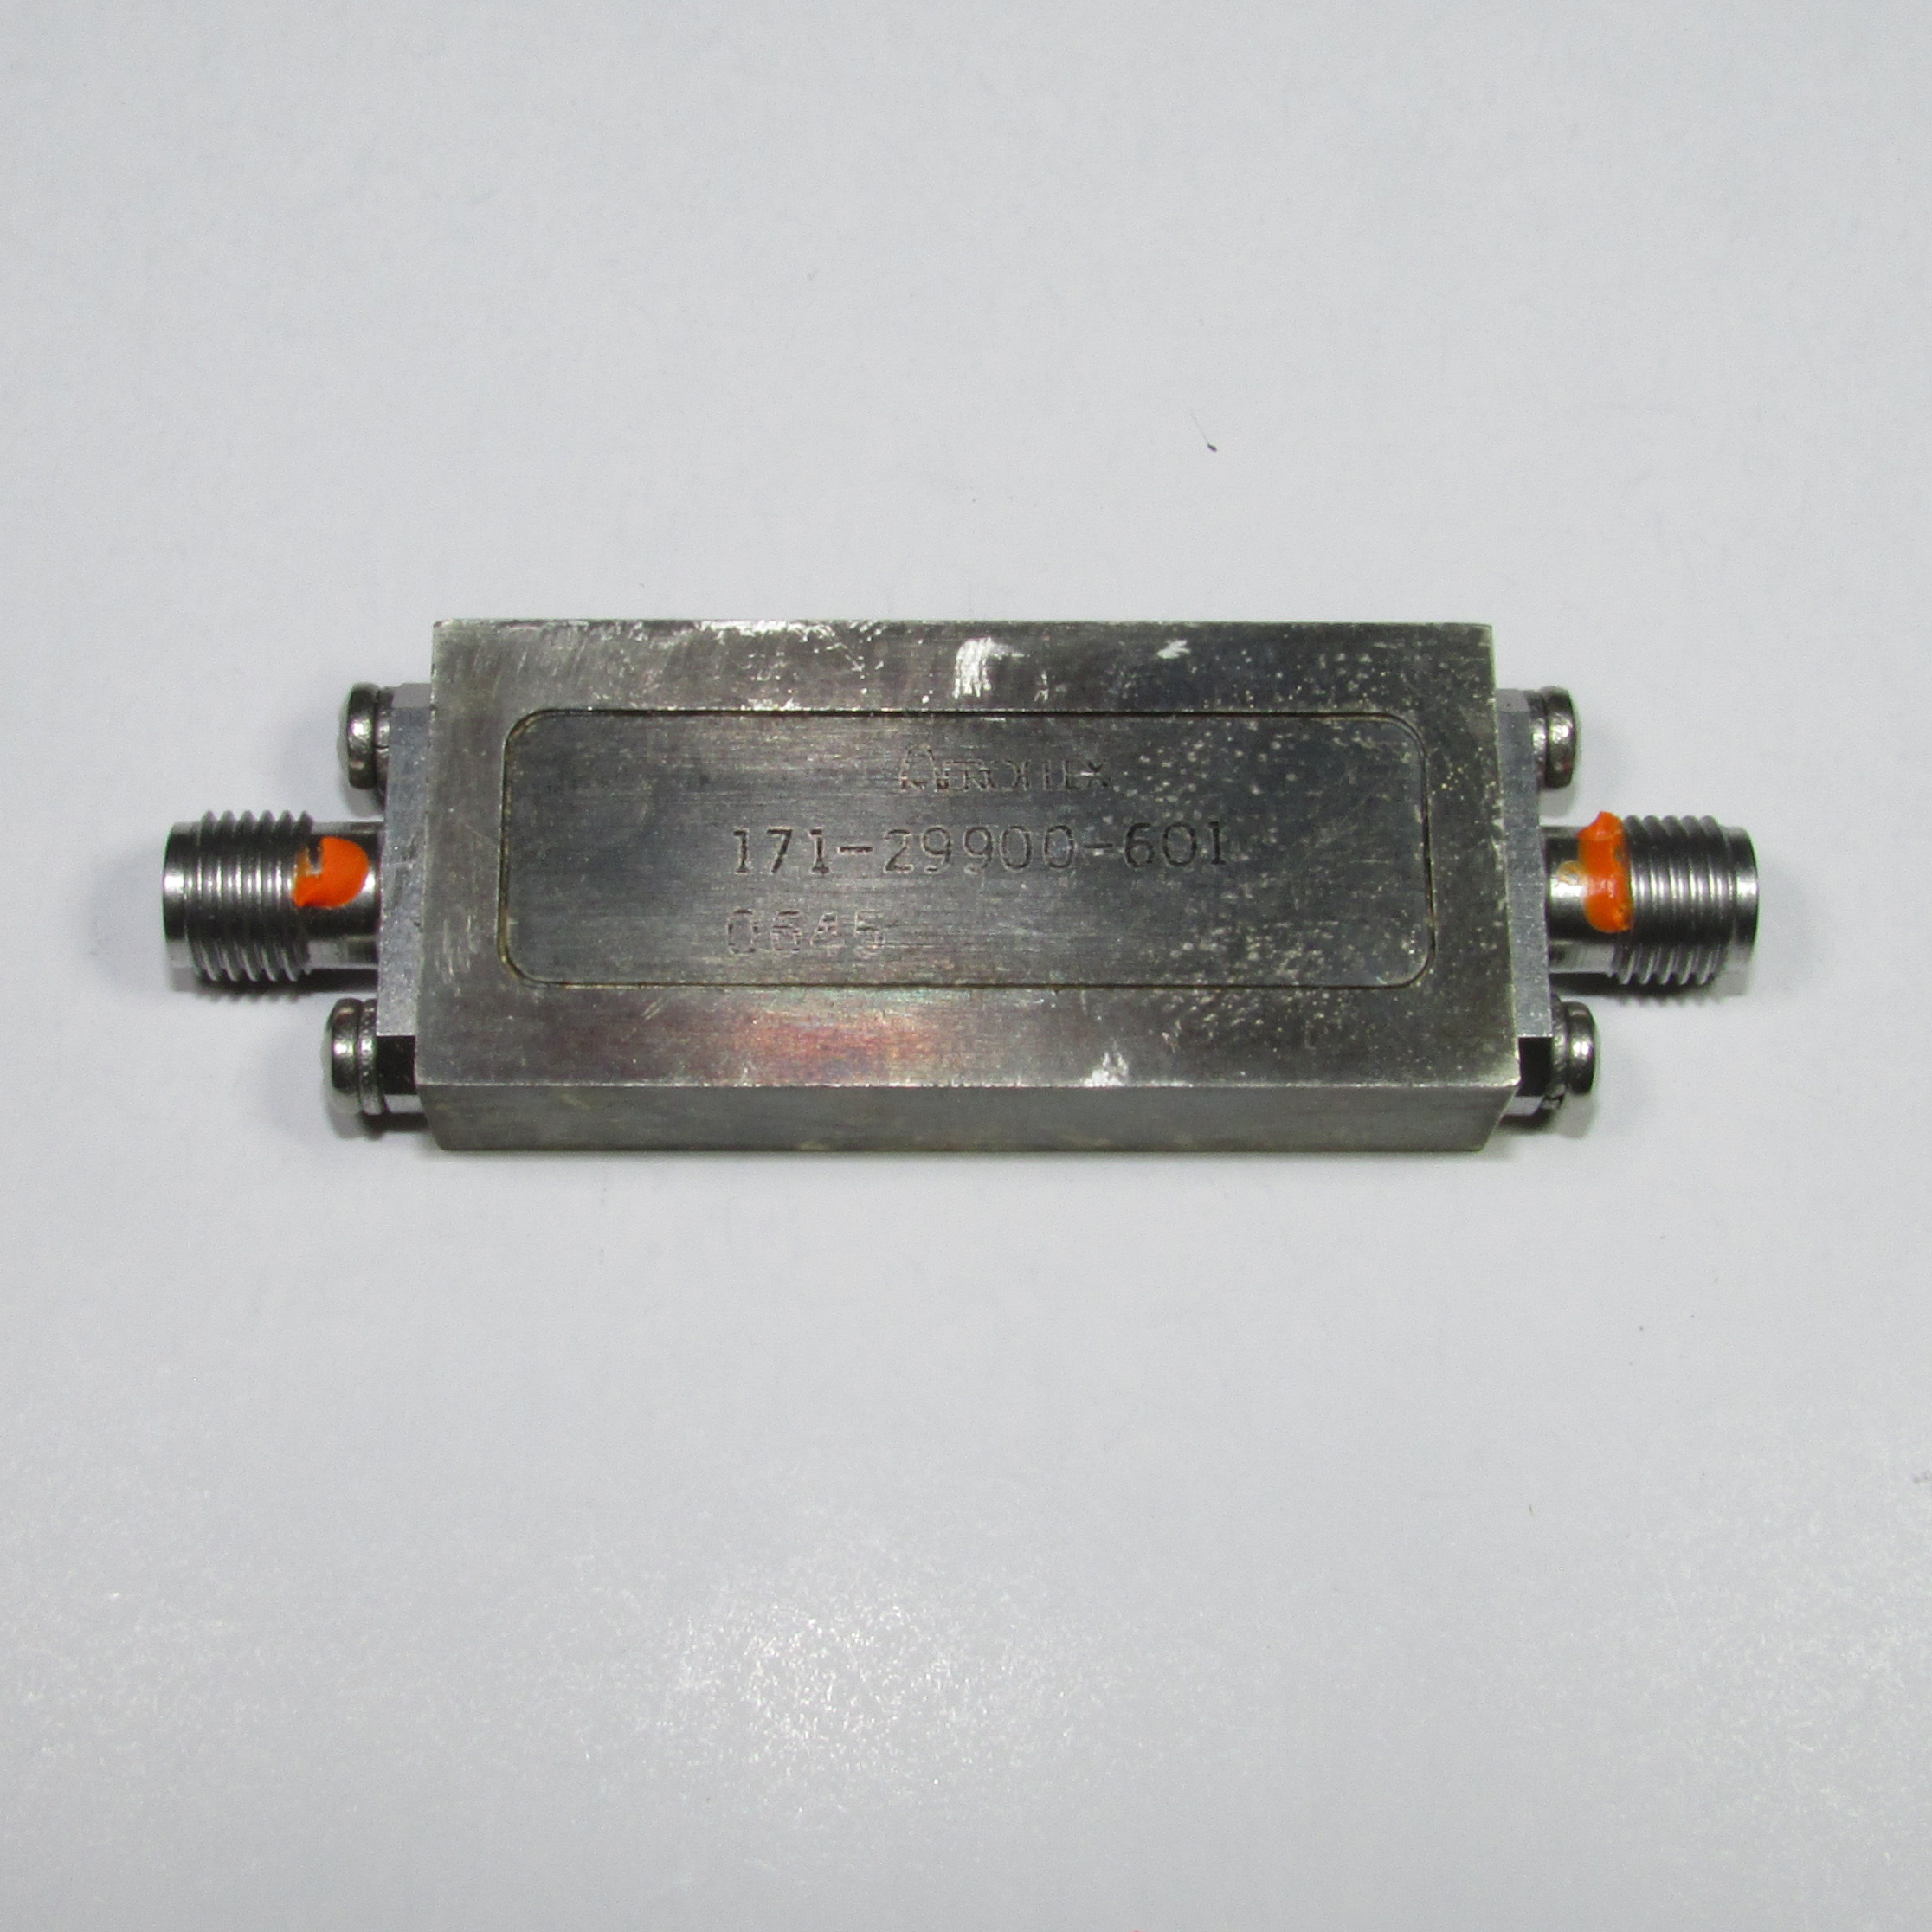 US Aeroflex 171-29900-601 180MHz SMA RF Microwave Coaxial Bandpass Filter